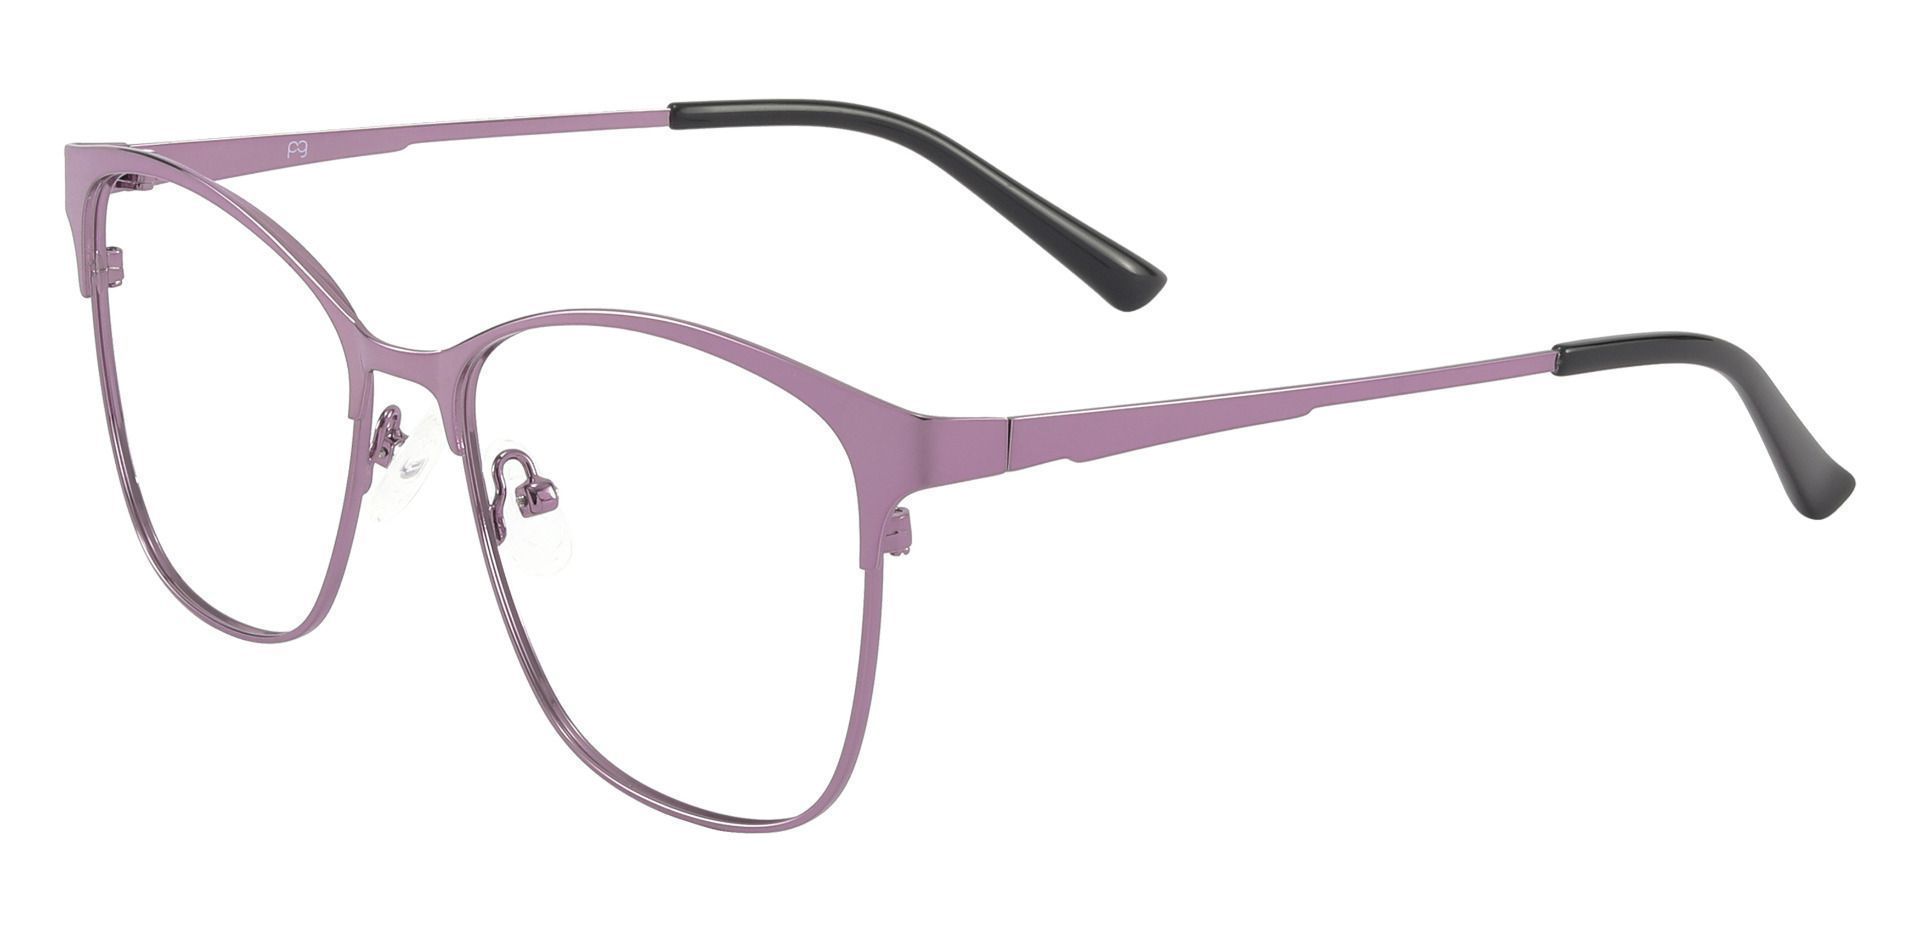 Briony Square Reading Glasses - Purple